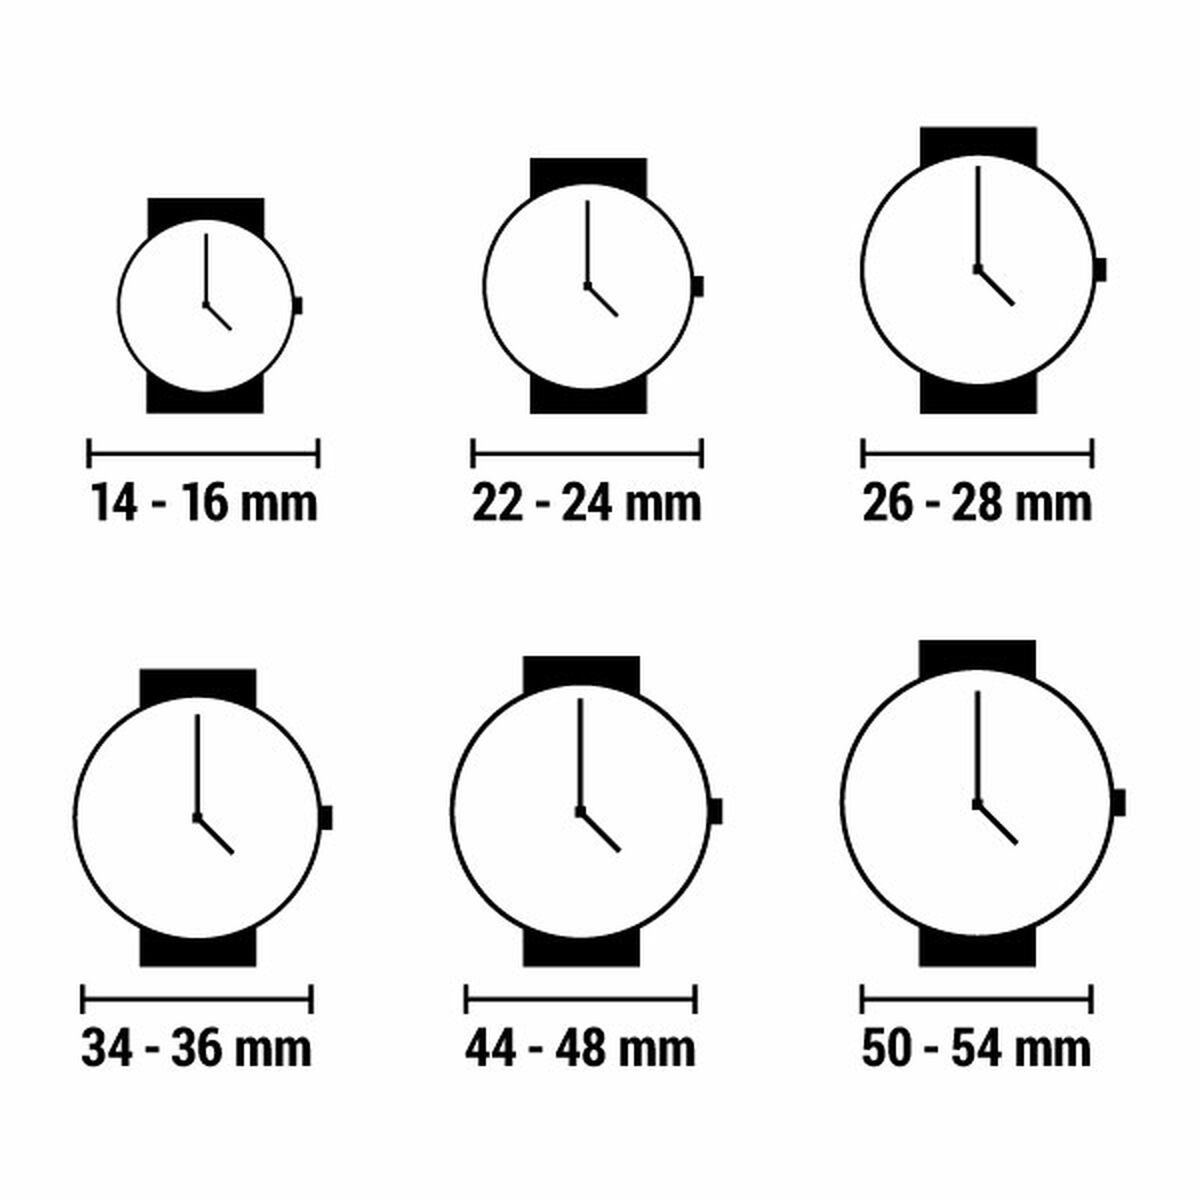 Horloge Dames Mark Maddox MM7016-13